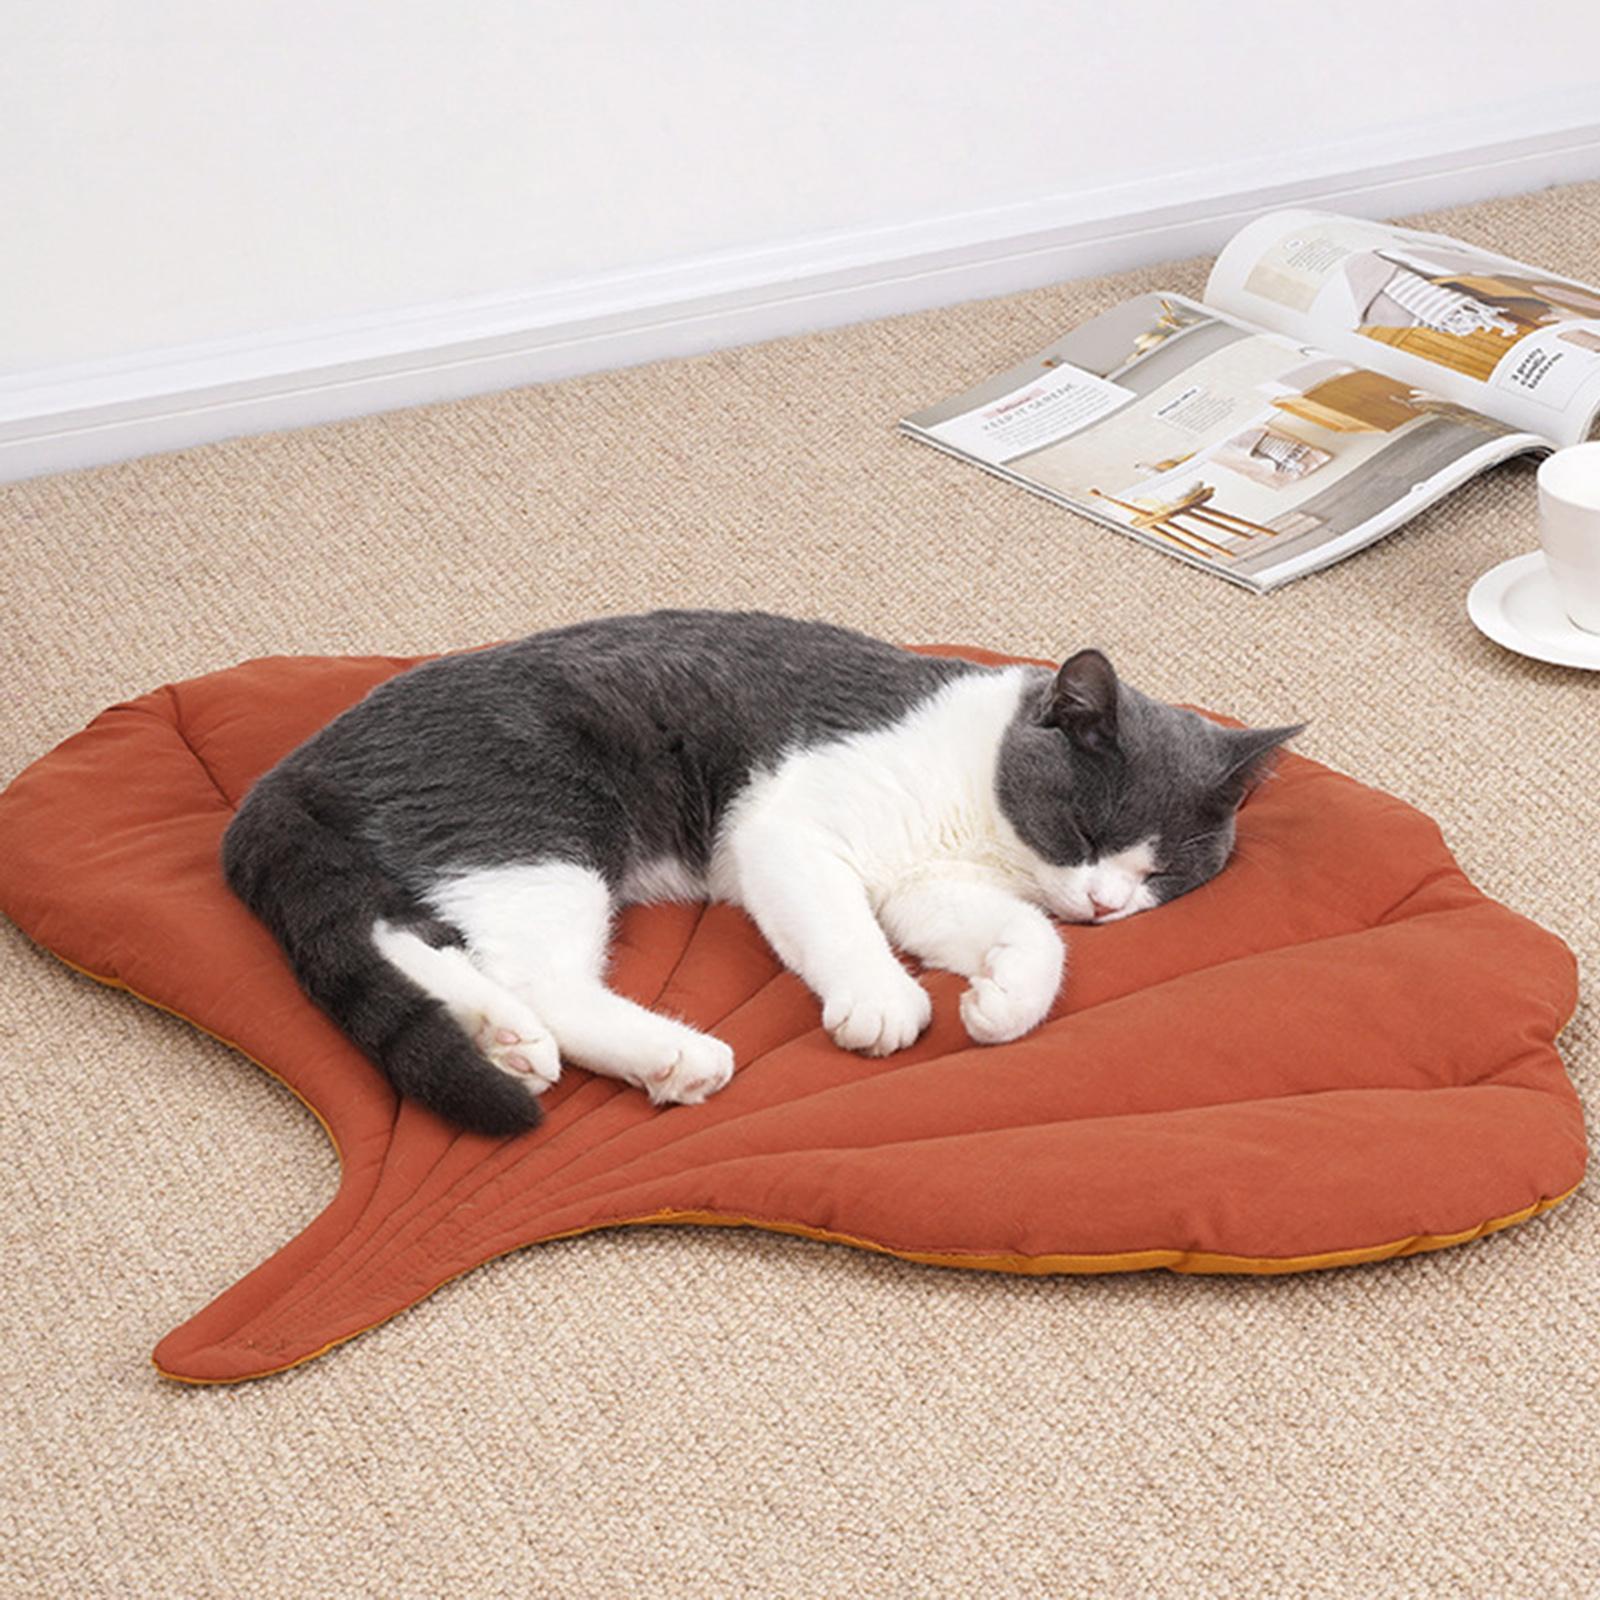 cat sleeping on dog shape leaf blanket 